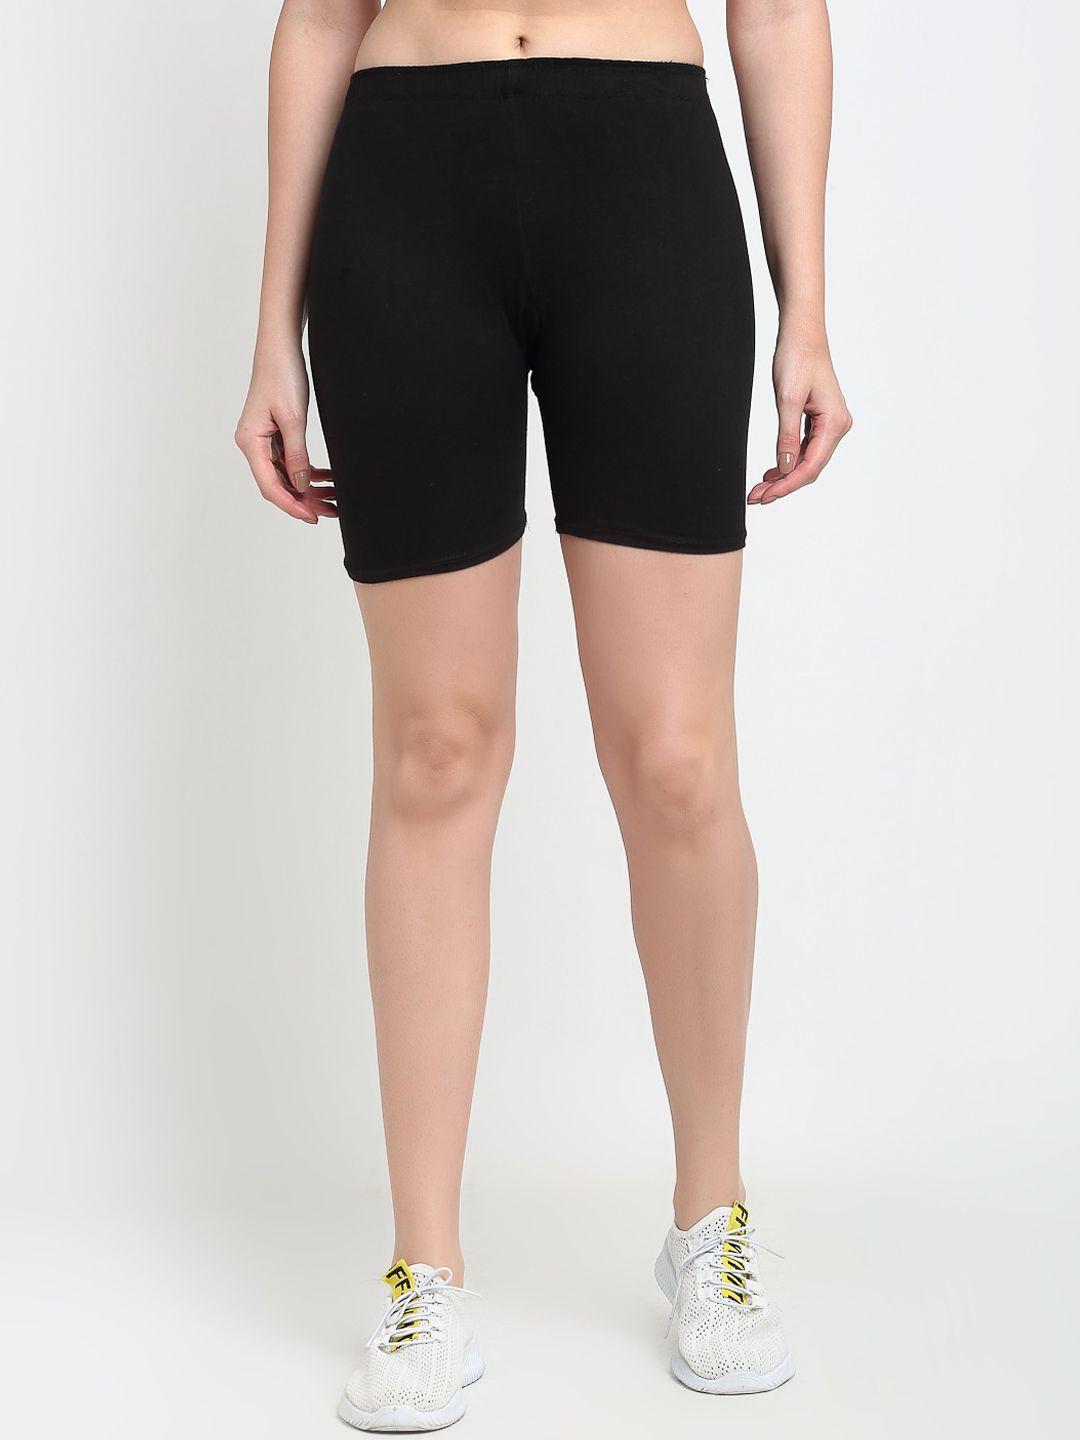 GRACIT Women Black Biker Shorts